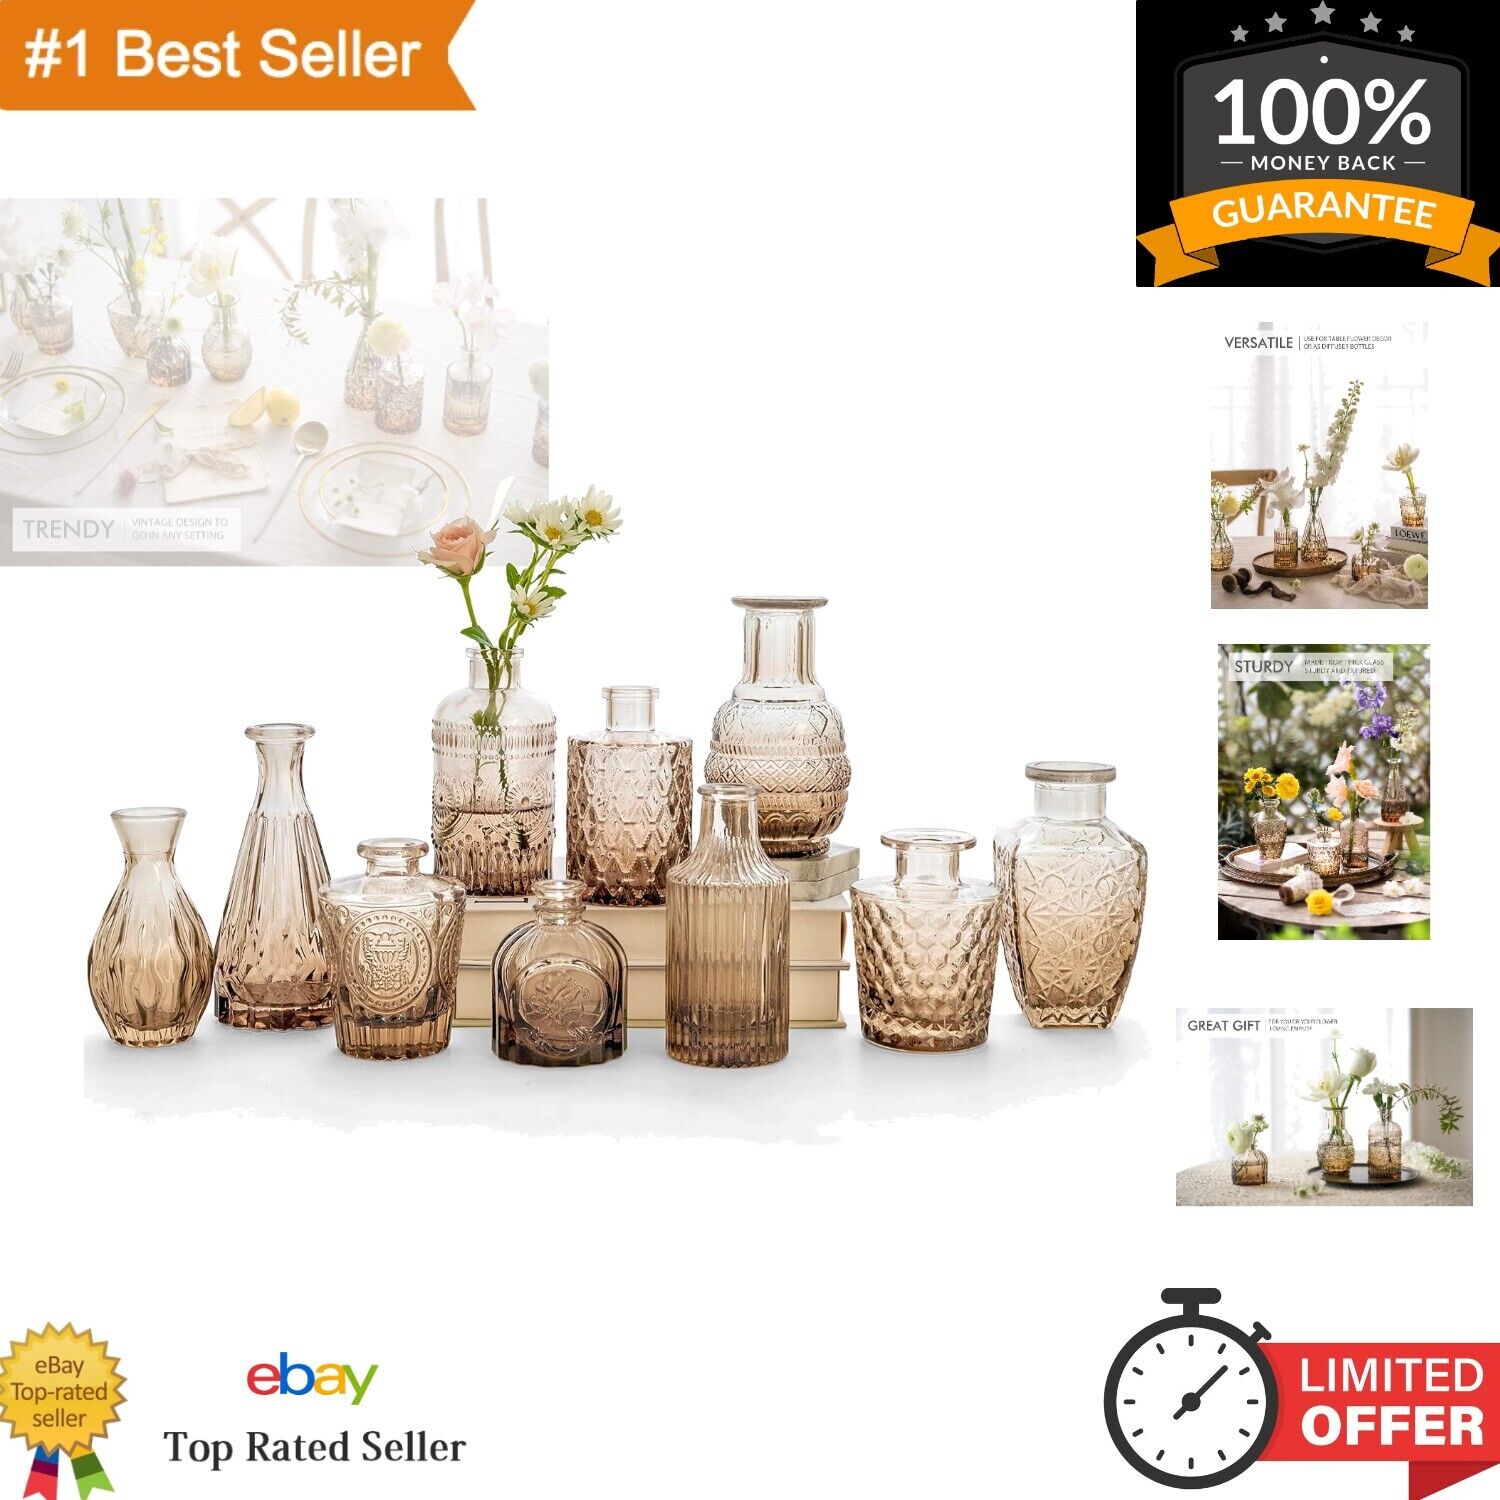 Charming Vintage Etched Glass Bud Vases Set of 10 - Ideal Centerpiece Decor